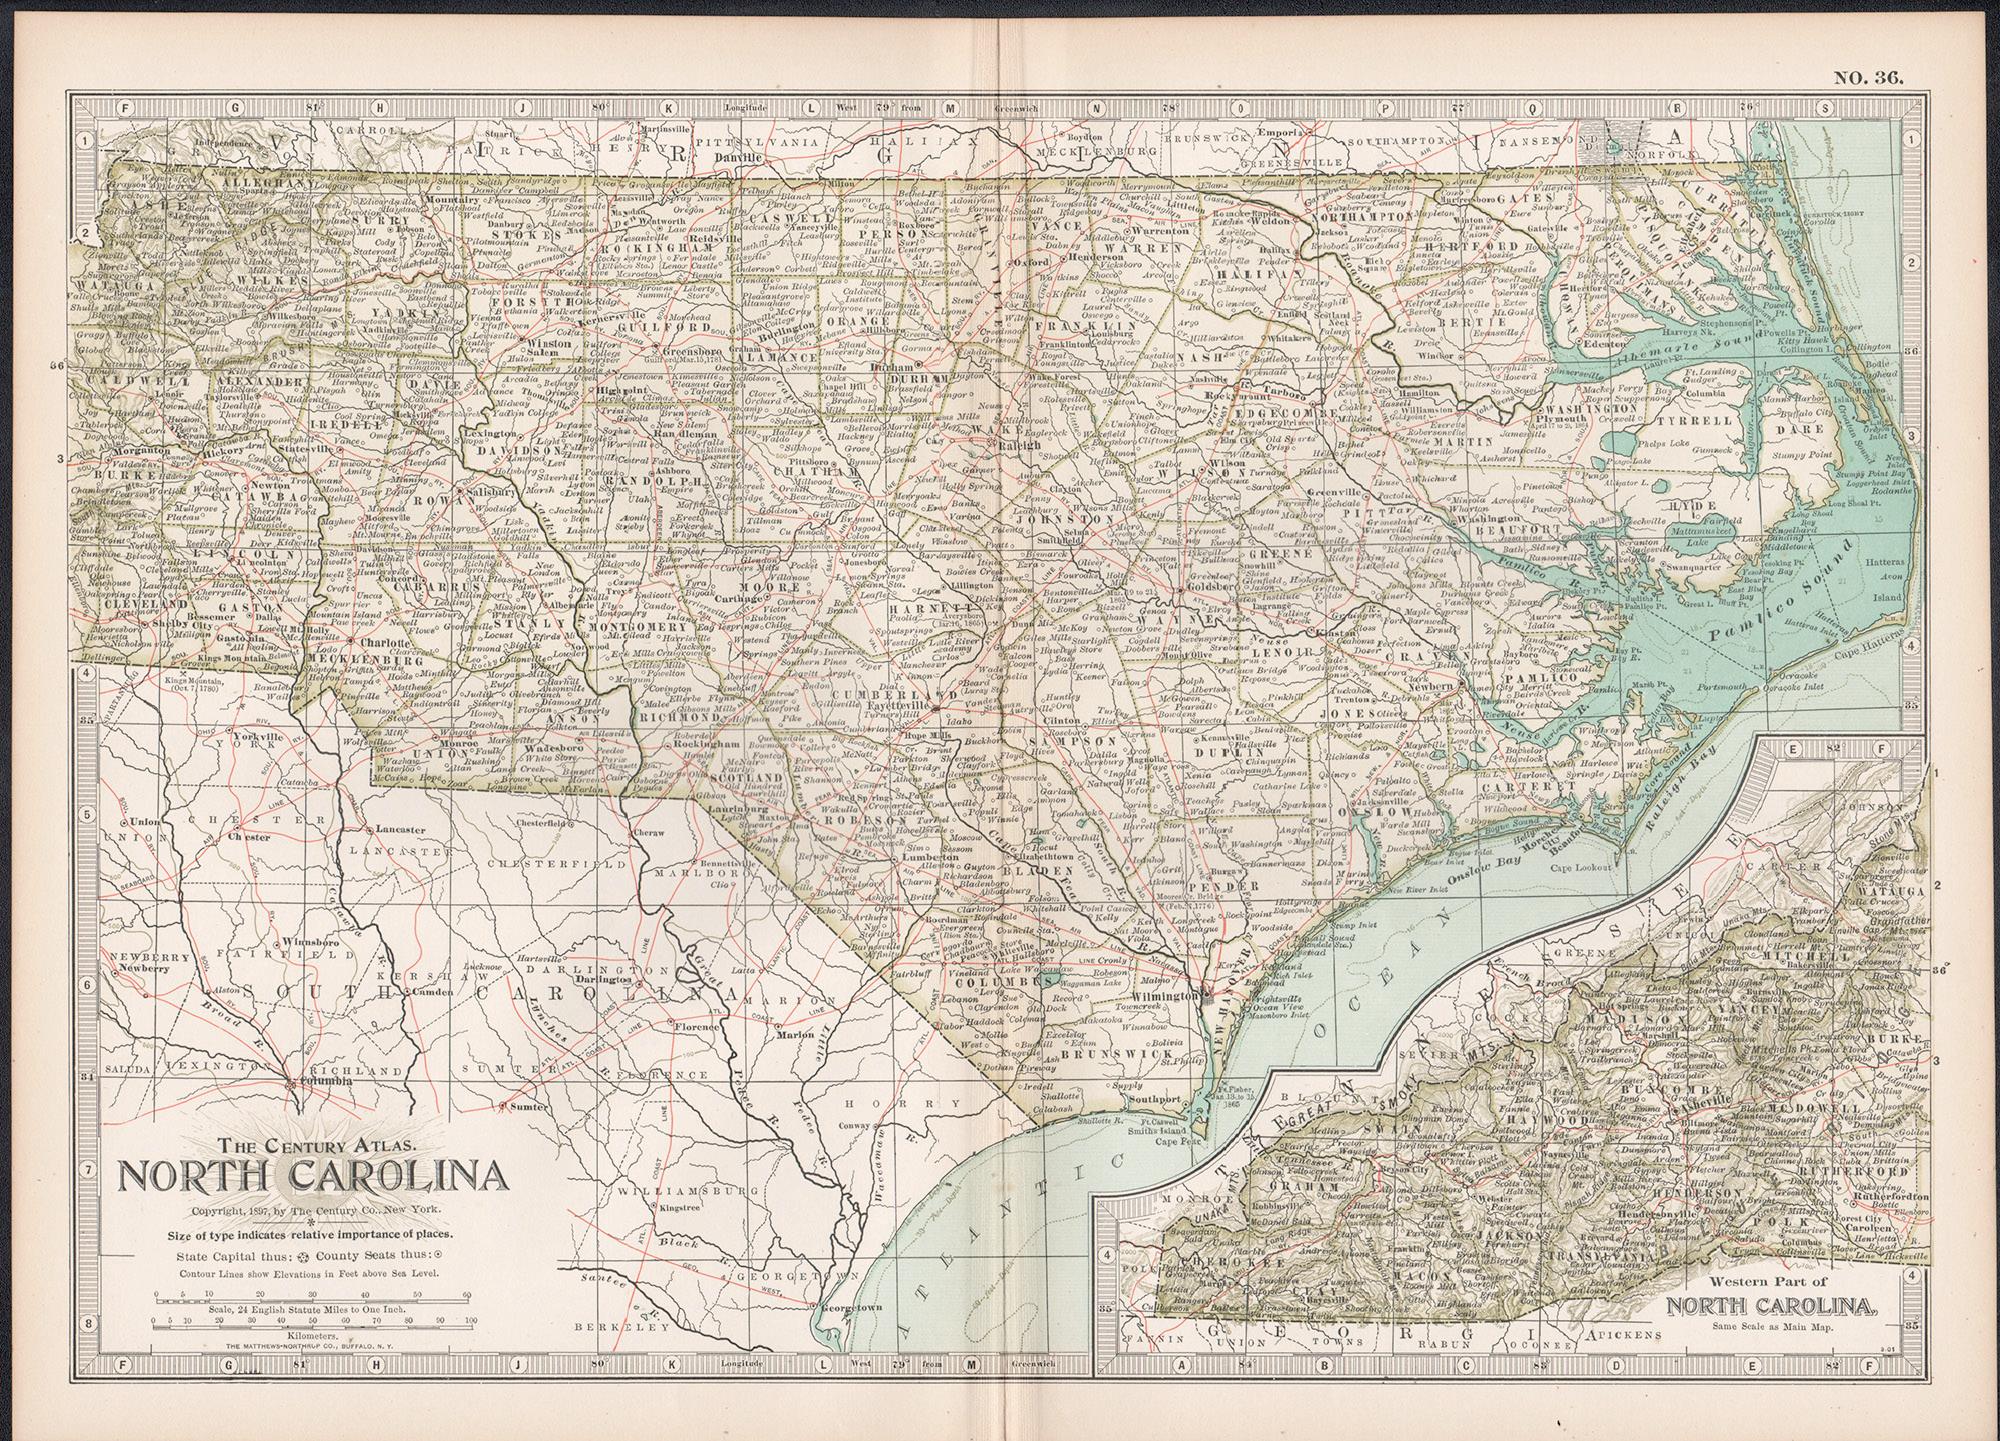 North Carolina. USA. Century Atlas state antique vintage map - Print by Unknown